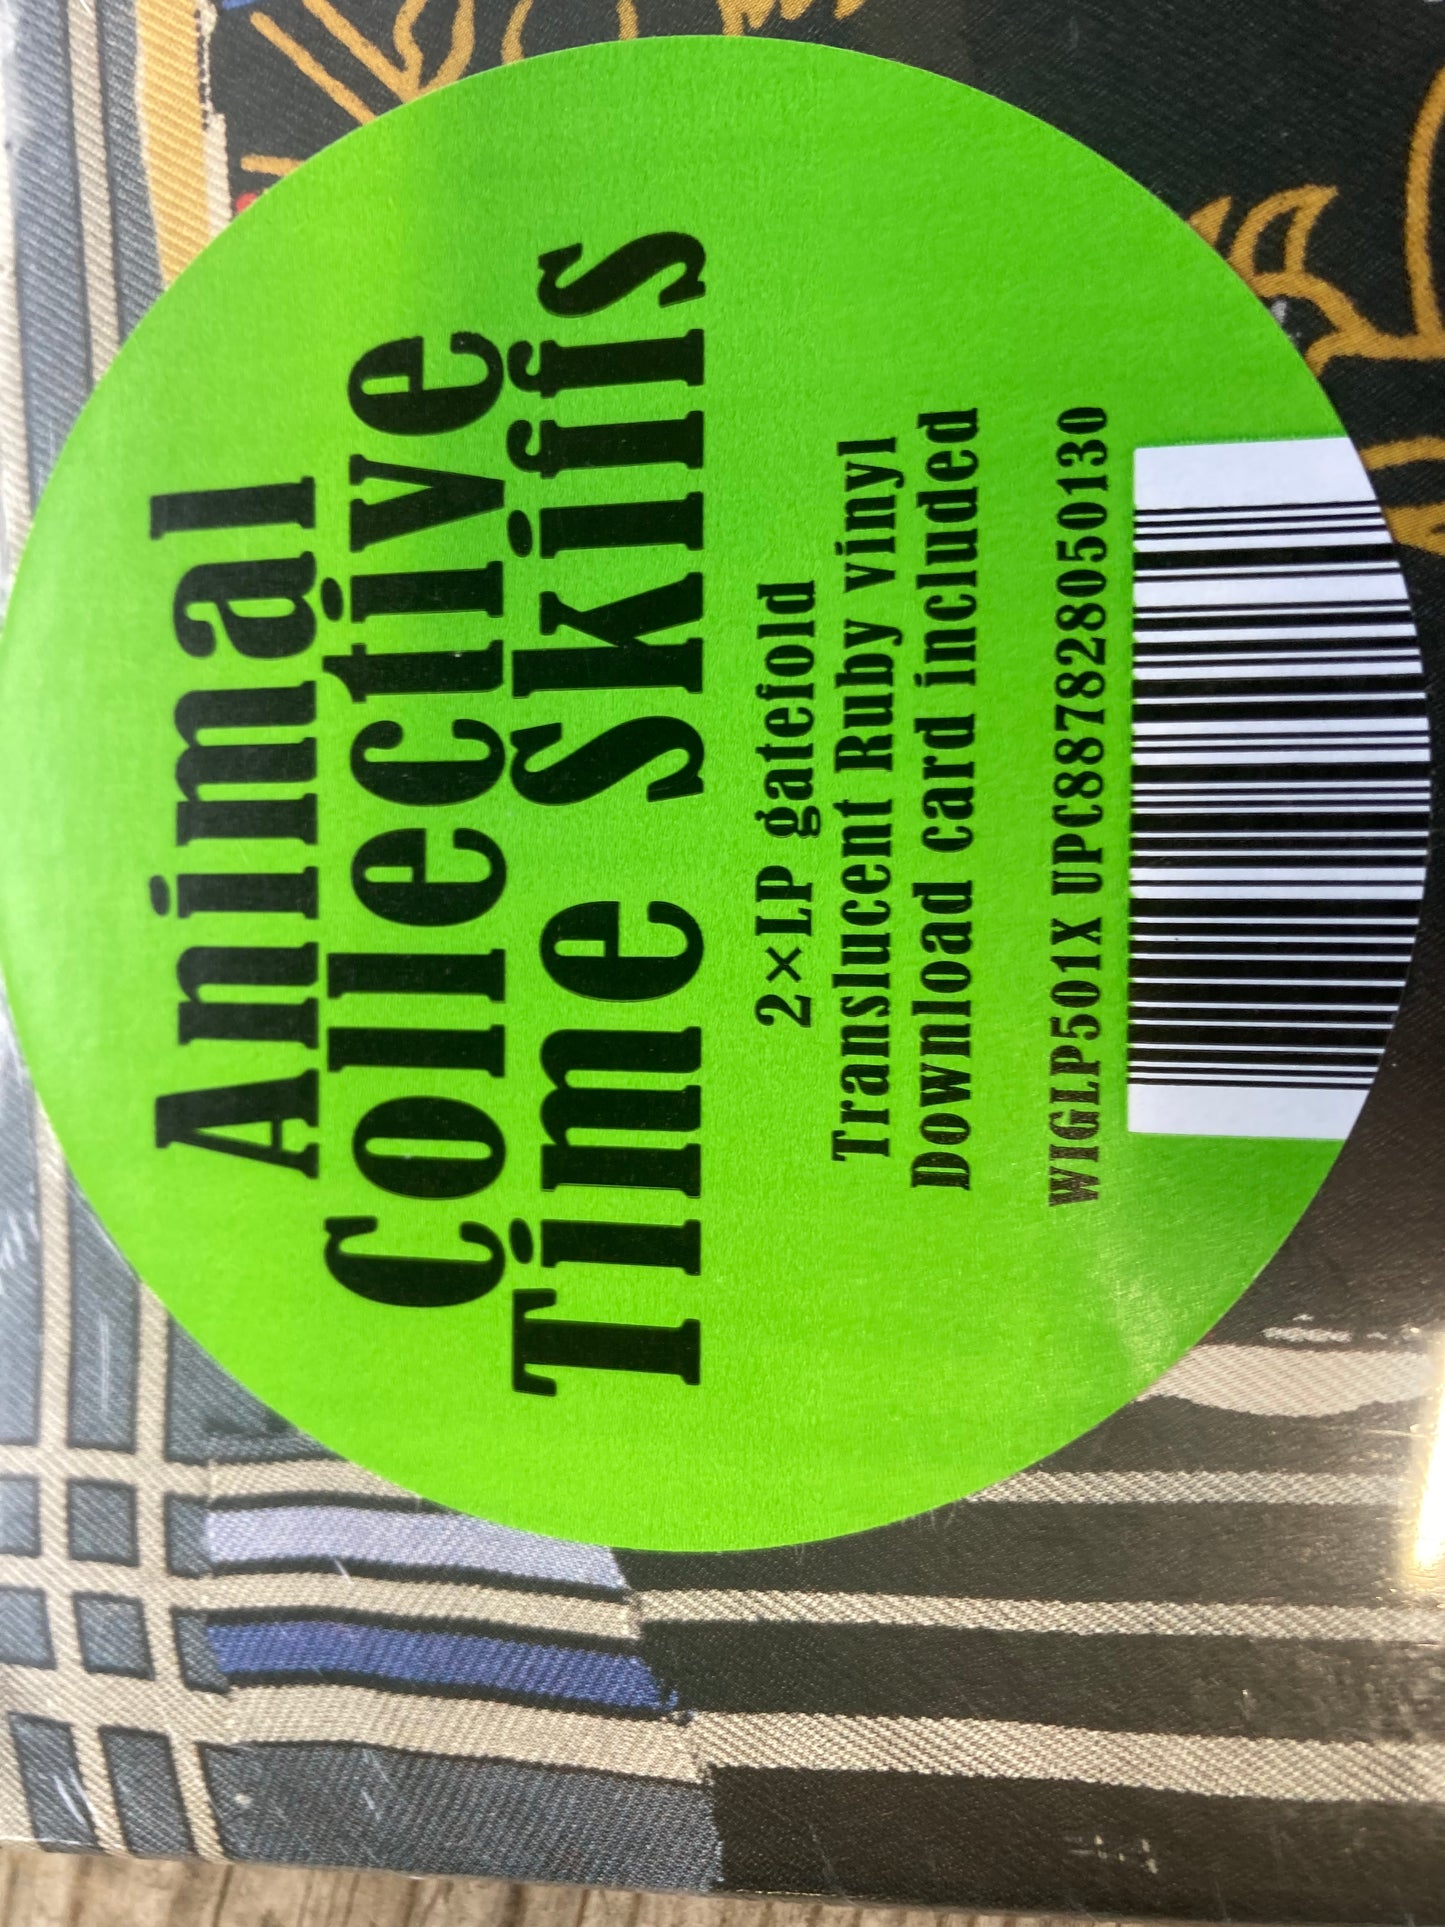 Animal Collective - Time Skiffs (Record LP Vinyl Album)